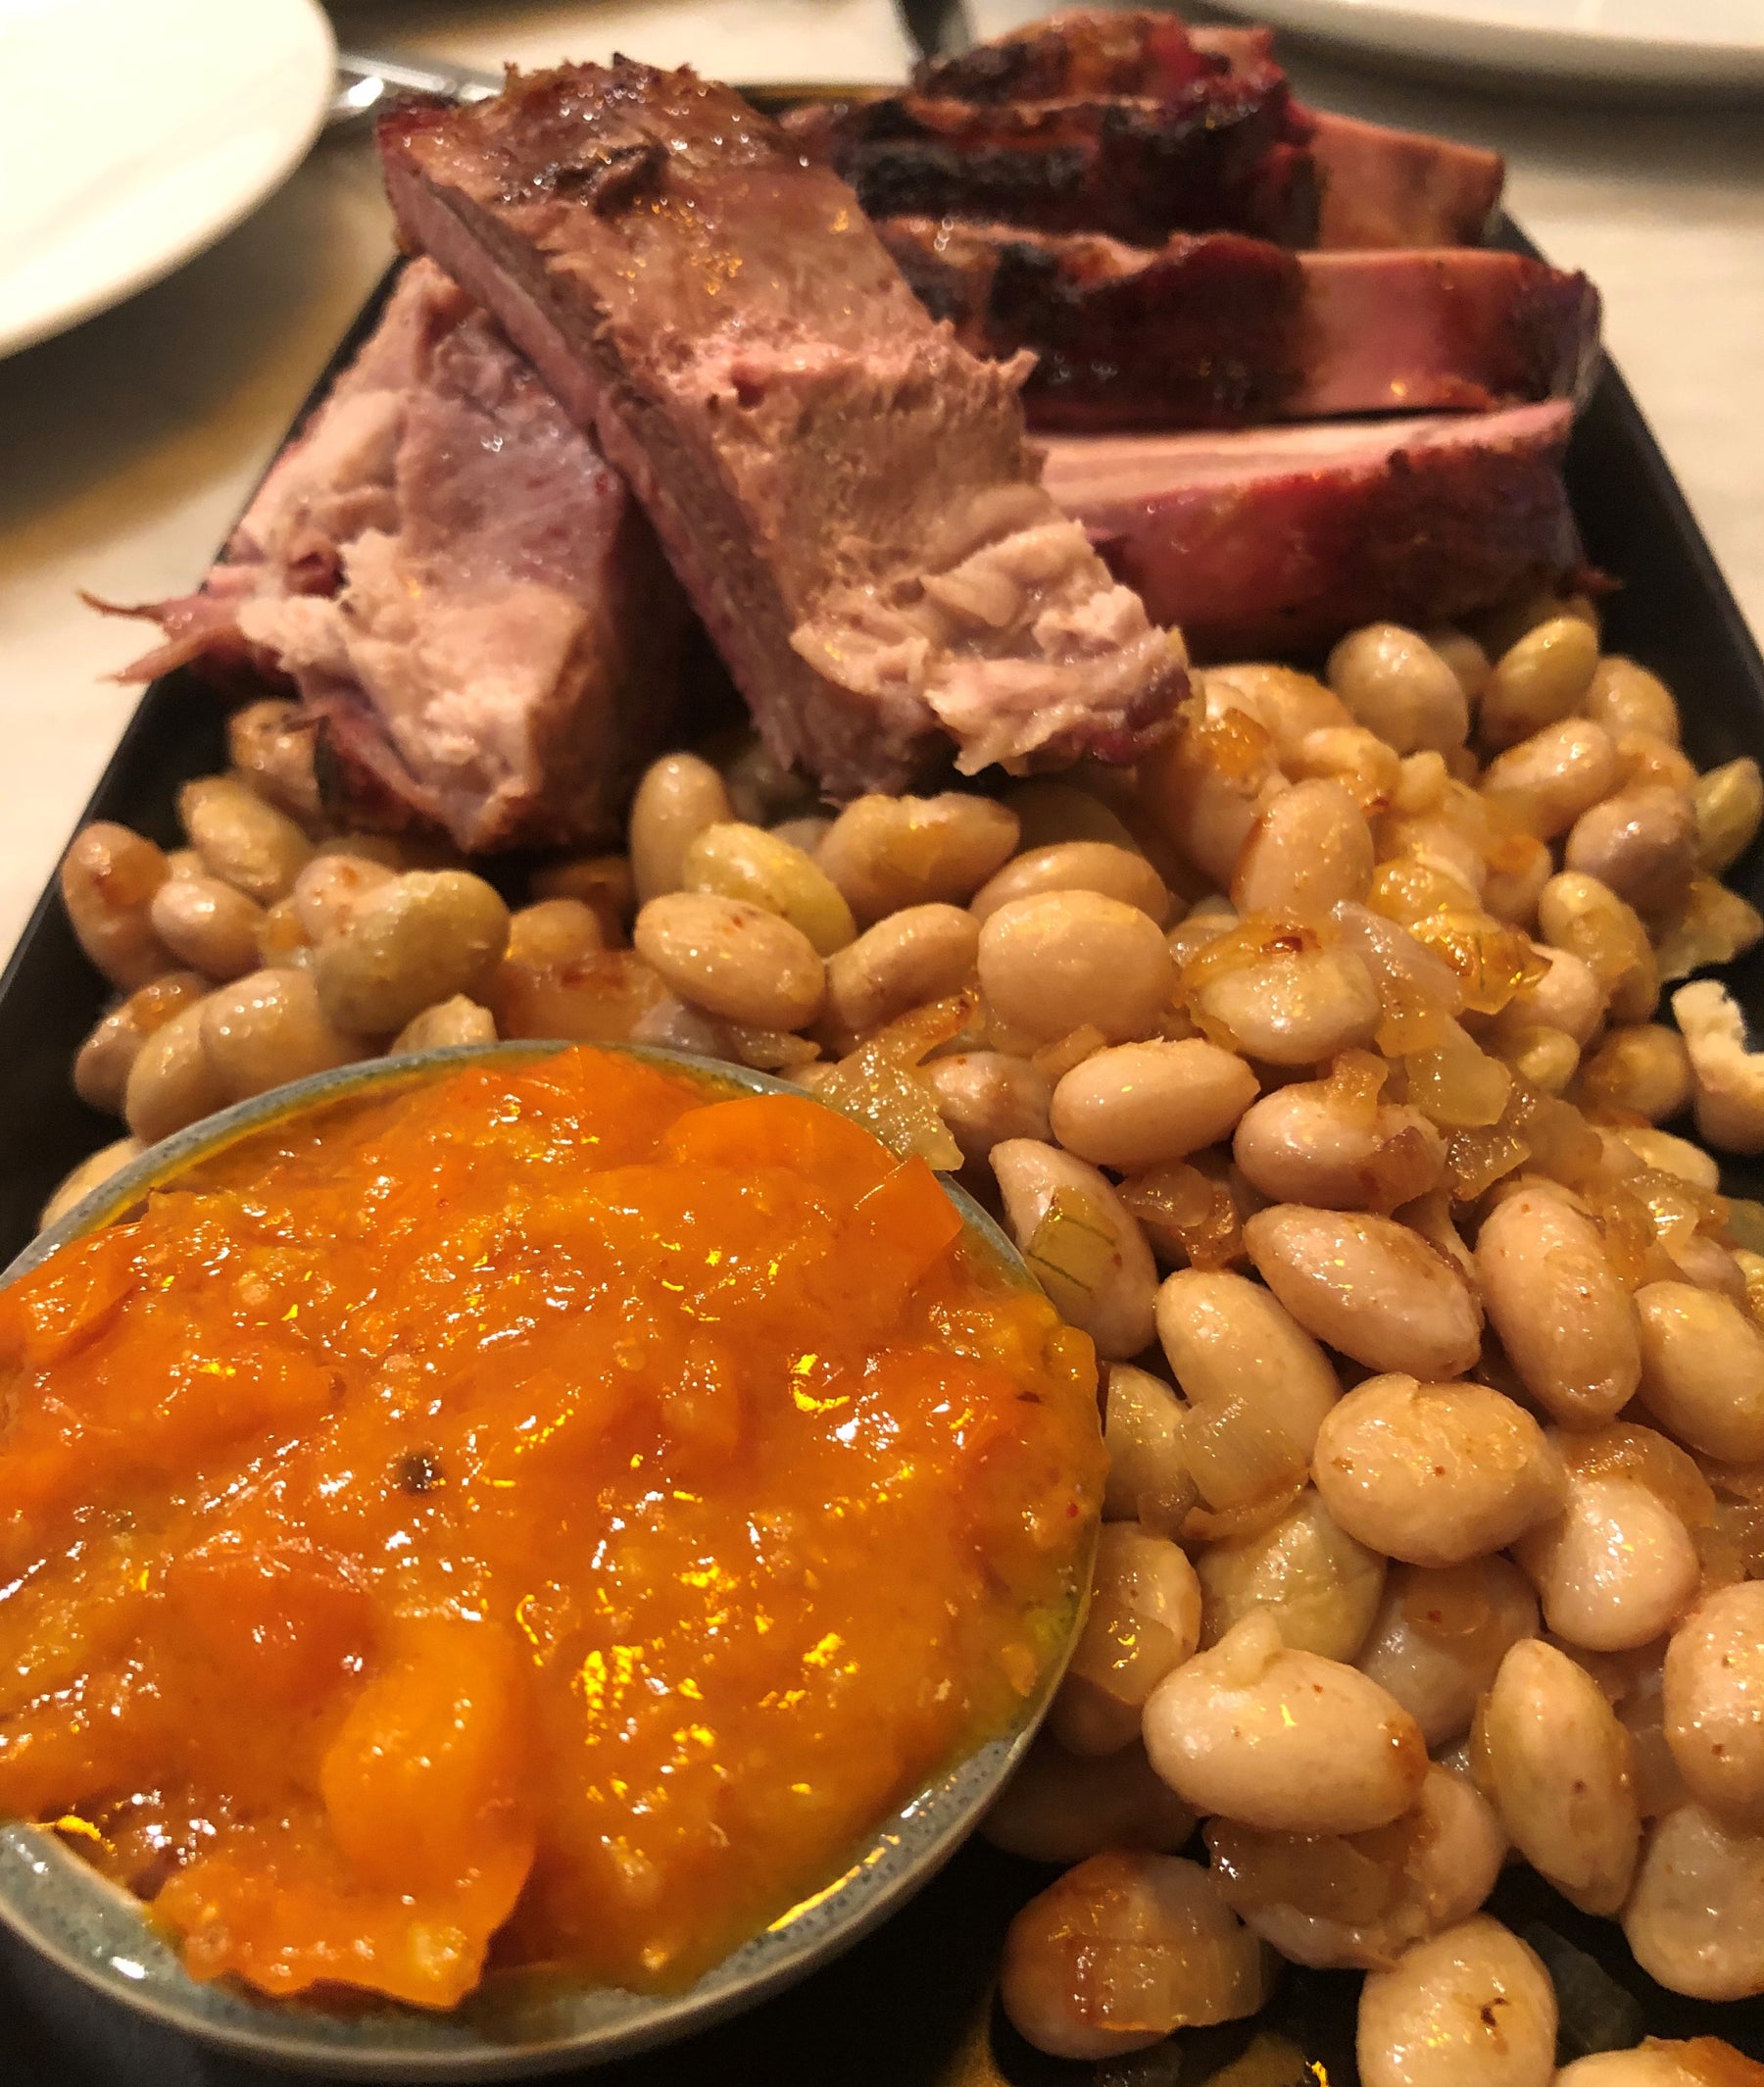 Pork, Beans and Tomato Jam